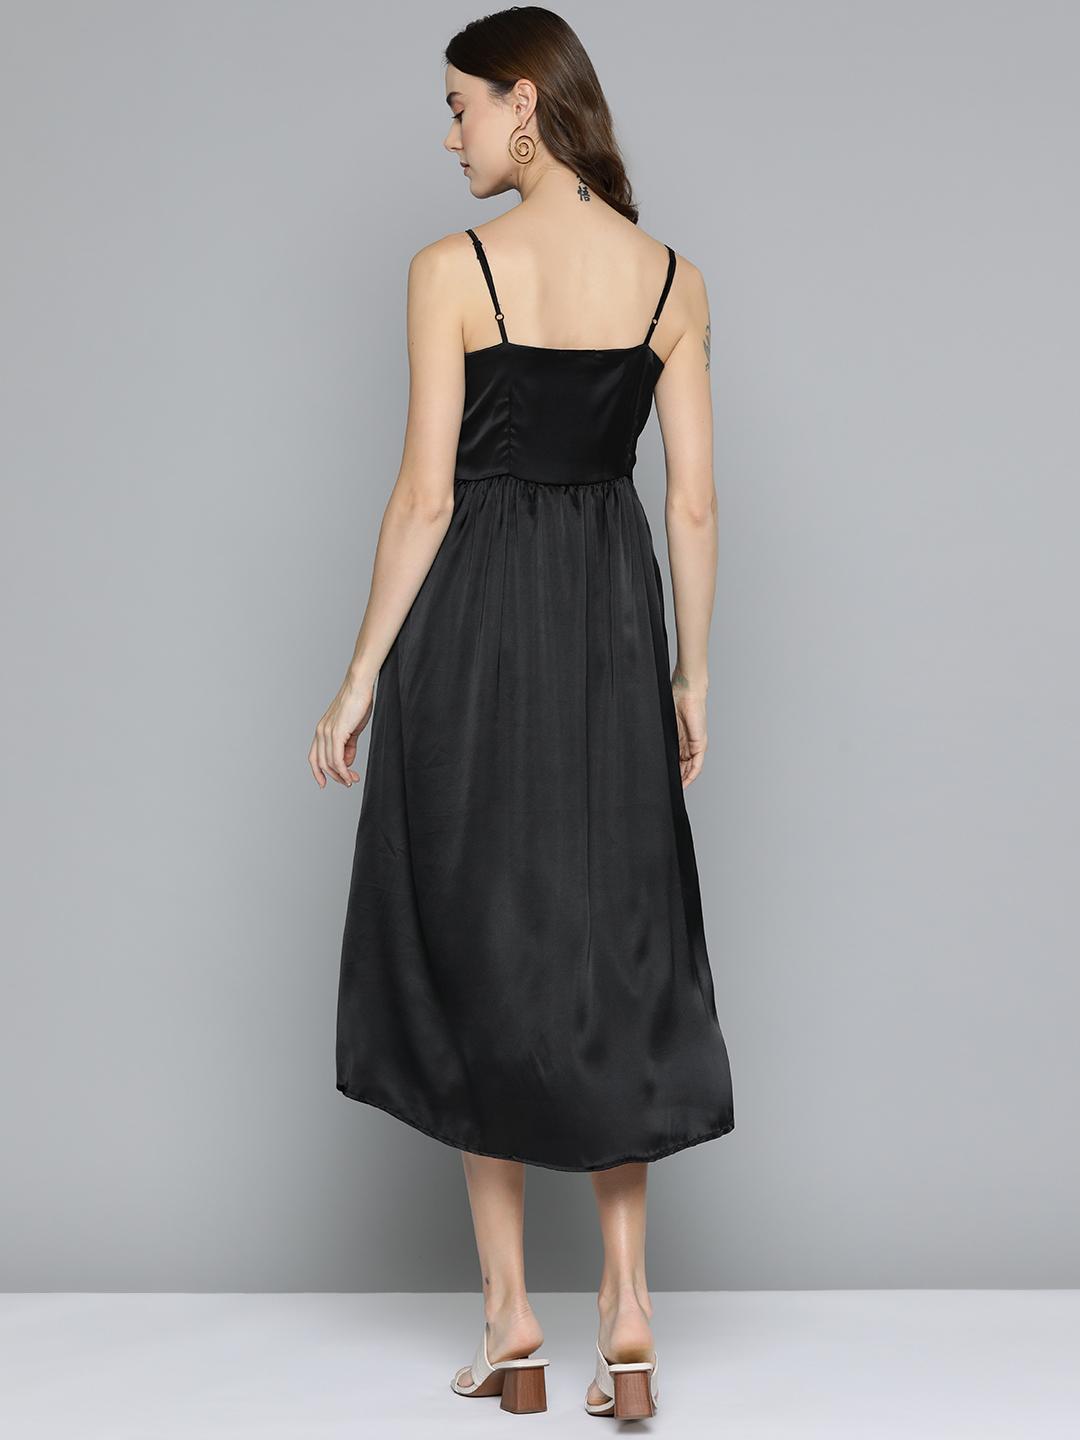 Black Velvet Applique Embroidered Dress